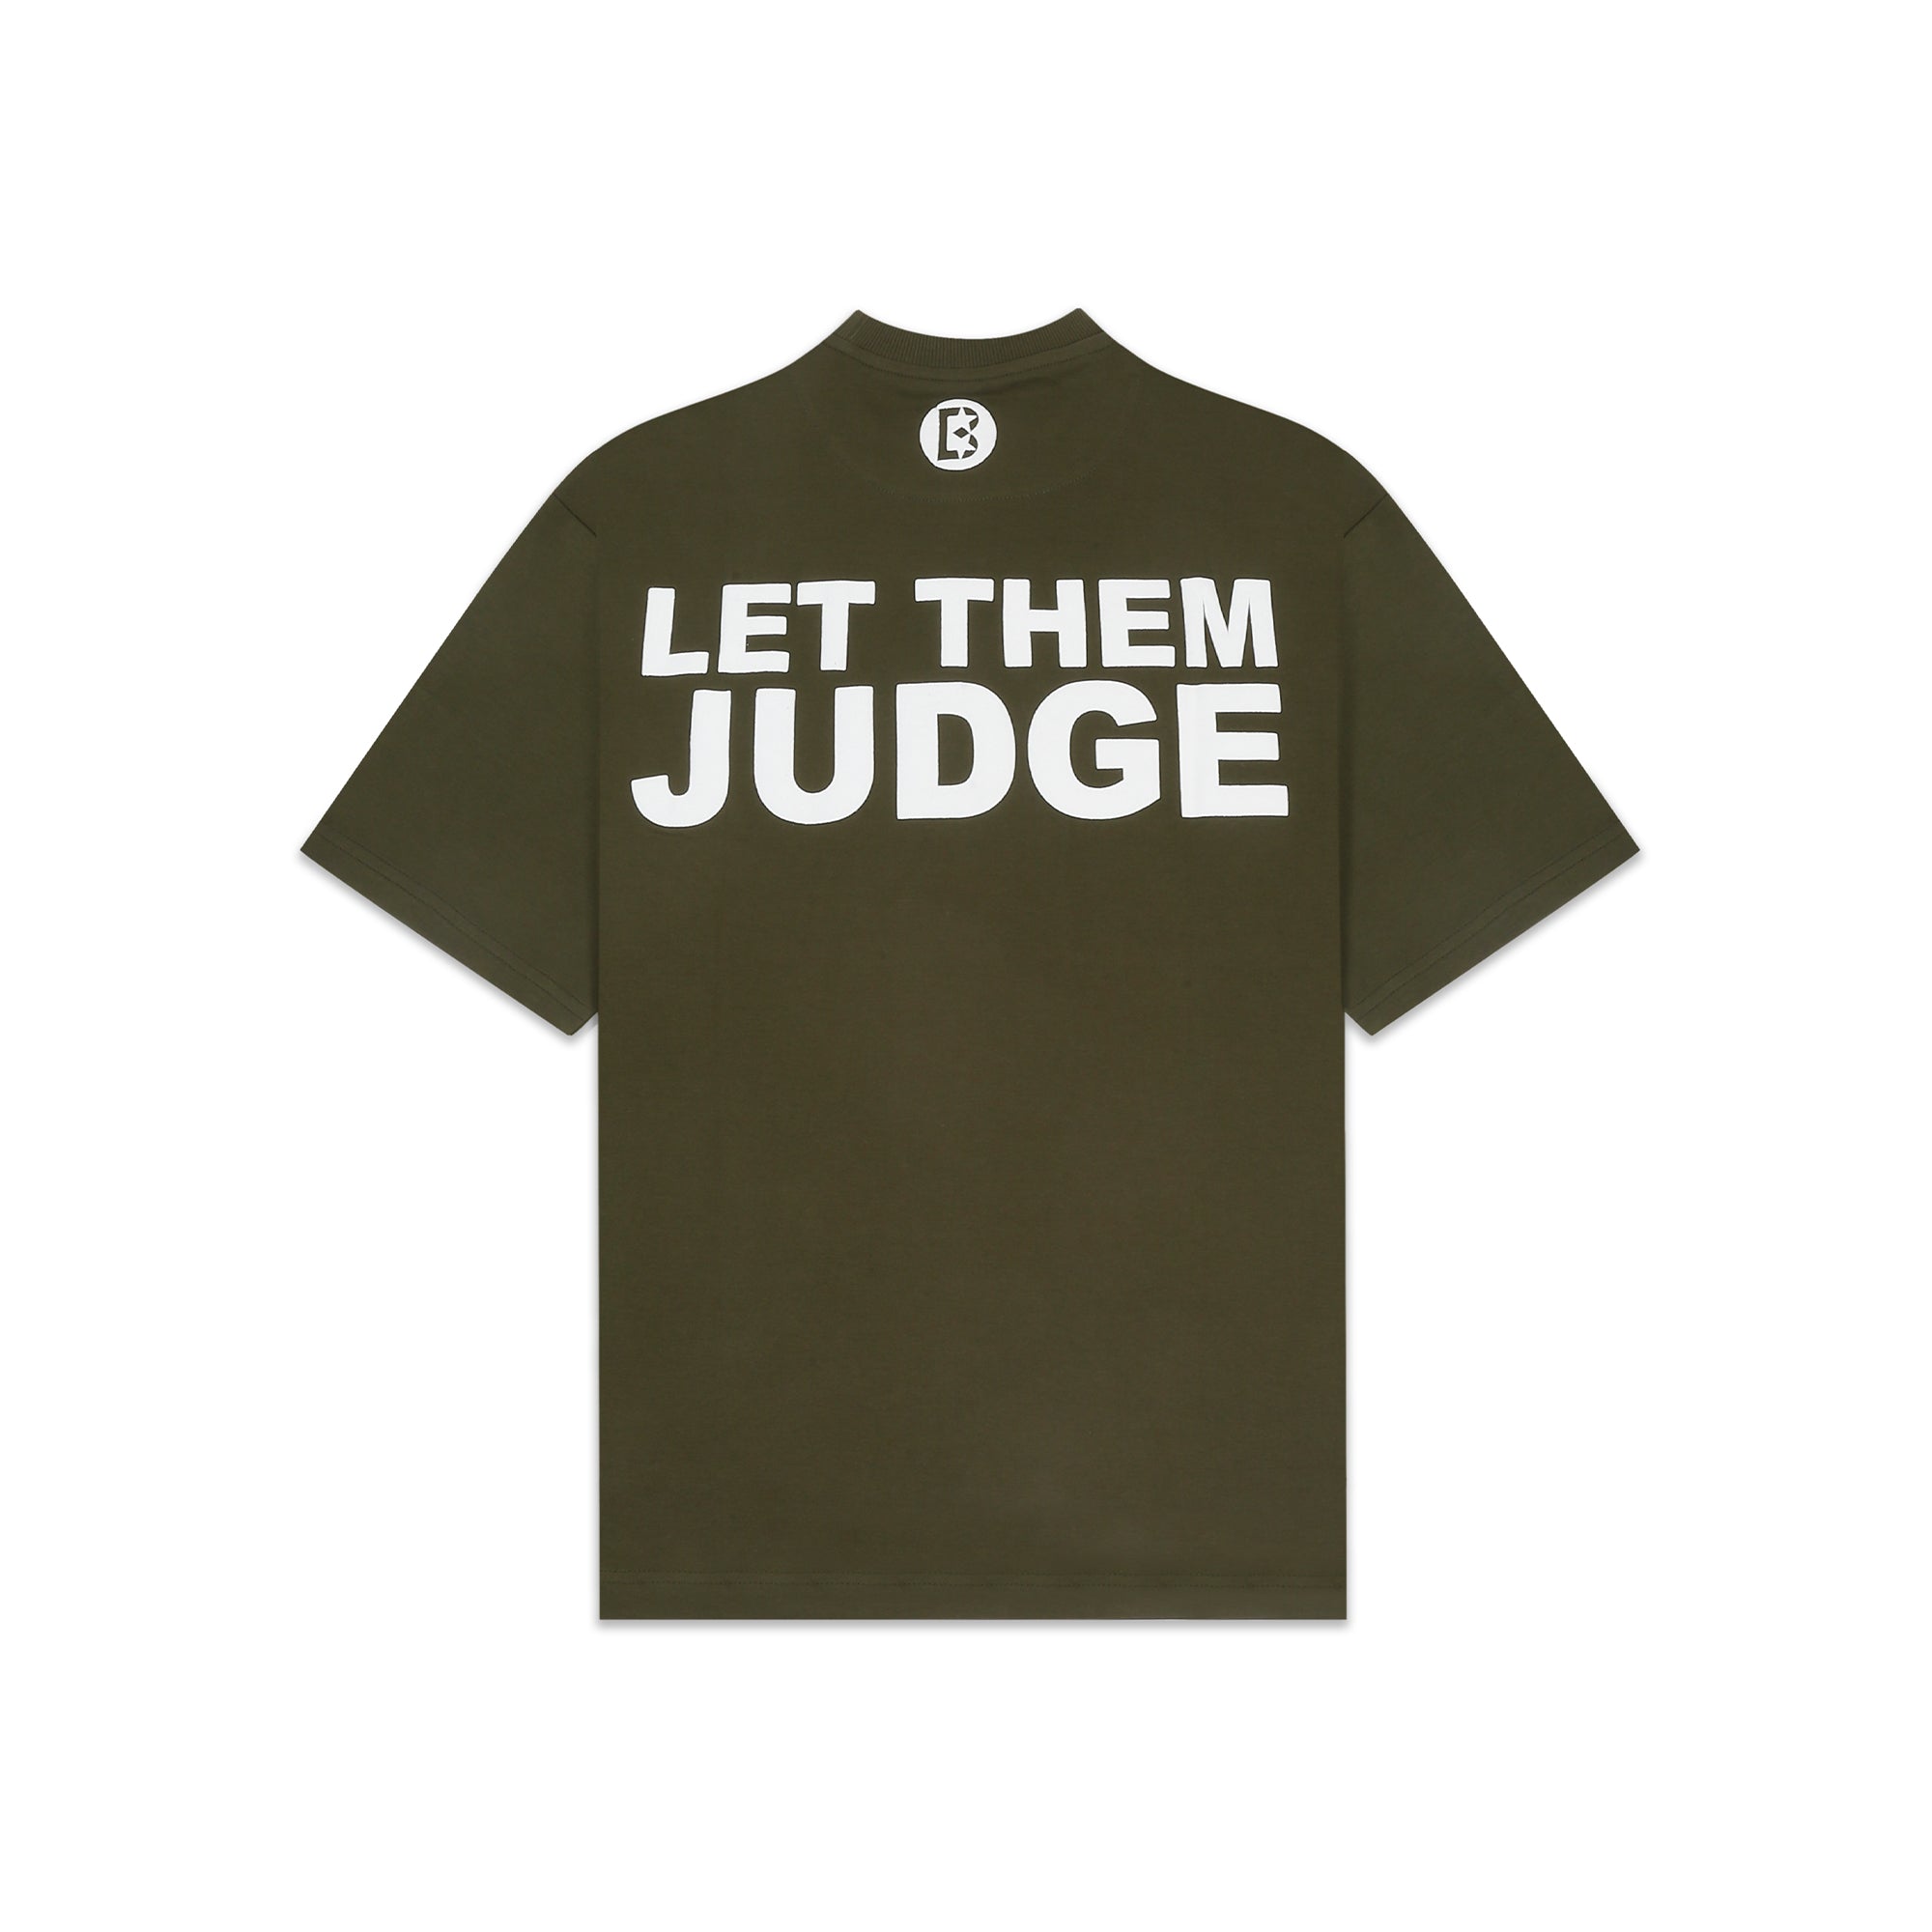 Let Them Judge Printed Olive Green T-shirt